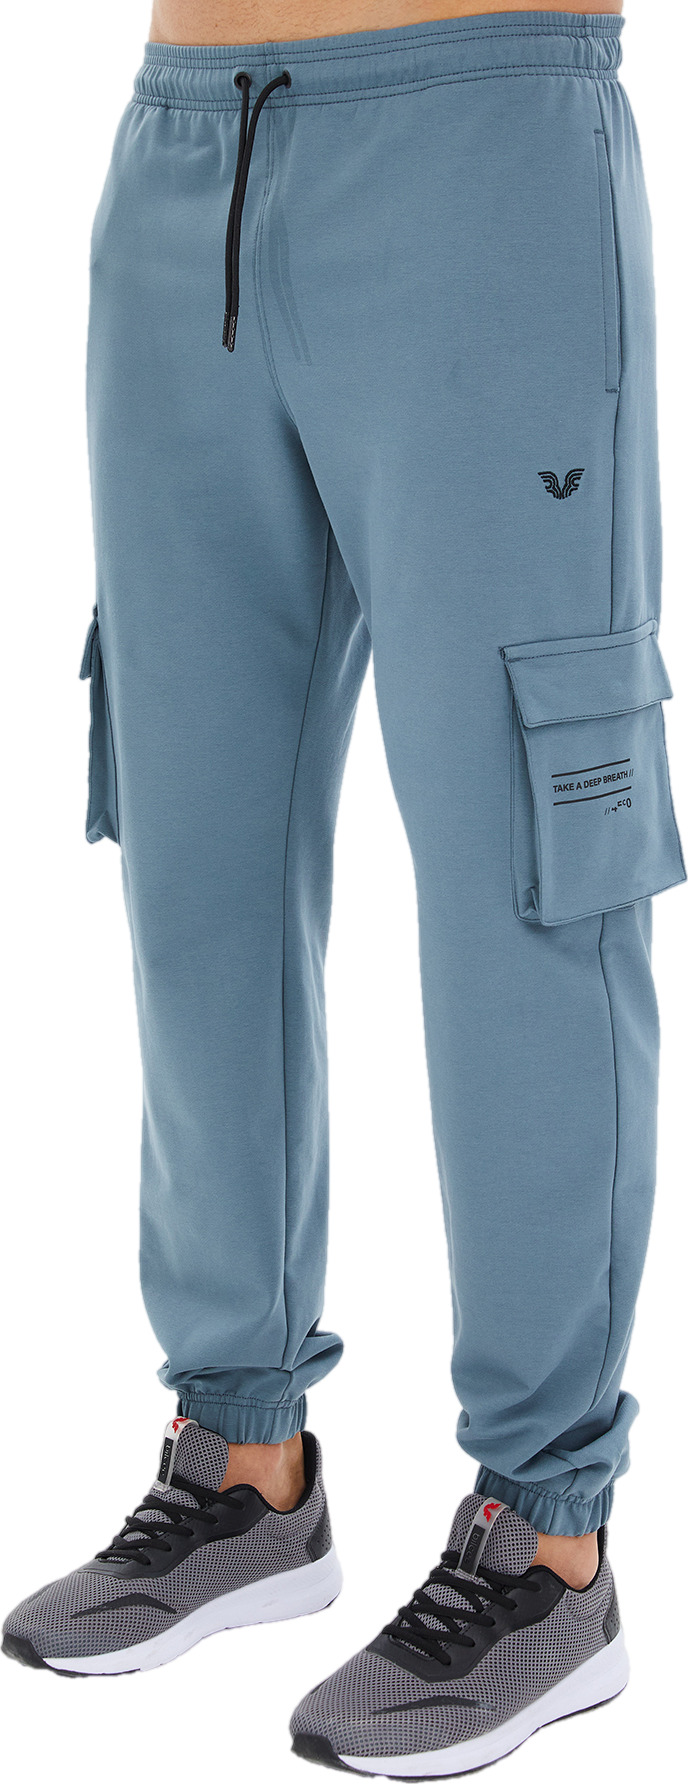 Спортивные брюки мужские Bilcee Men Knitting Pants синие L